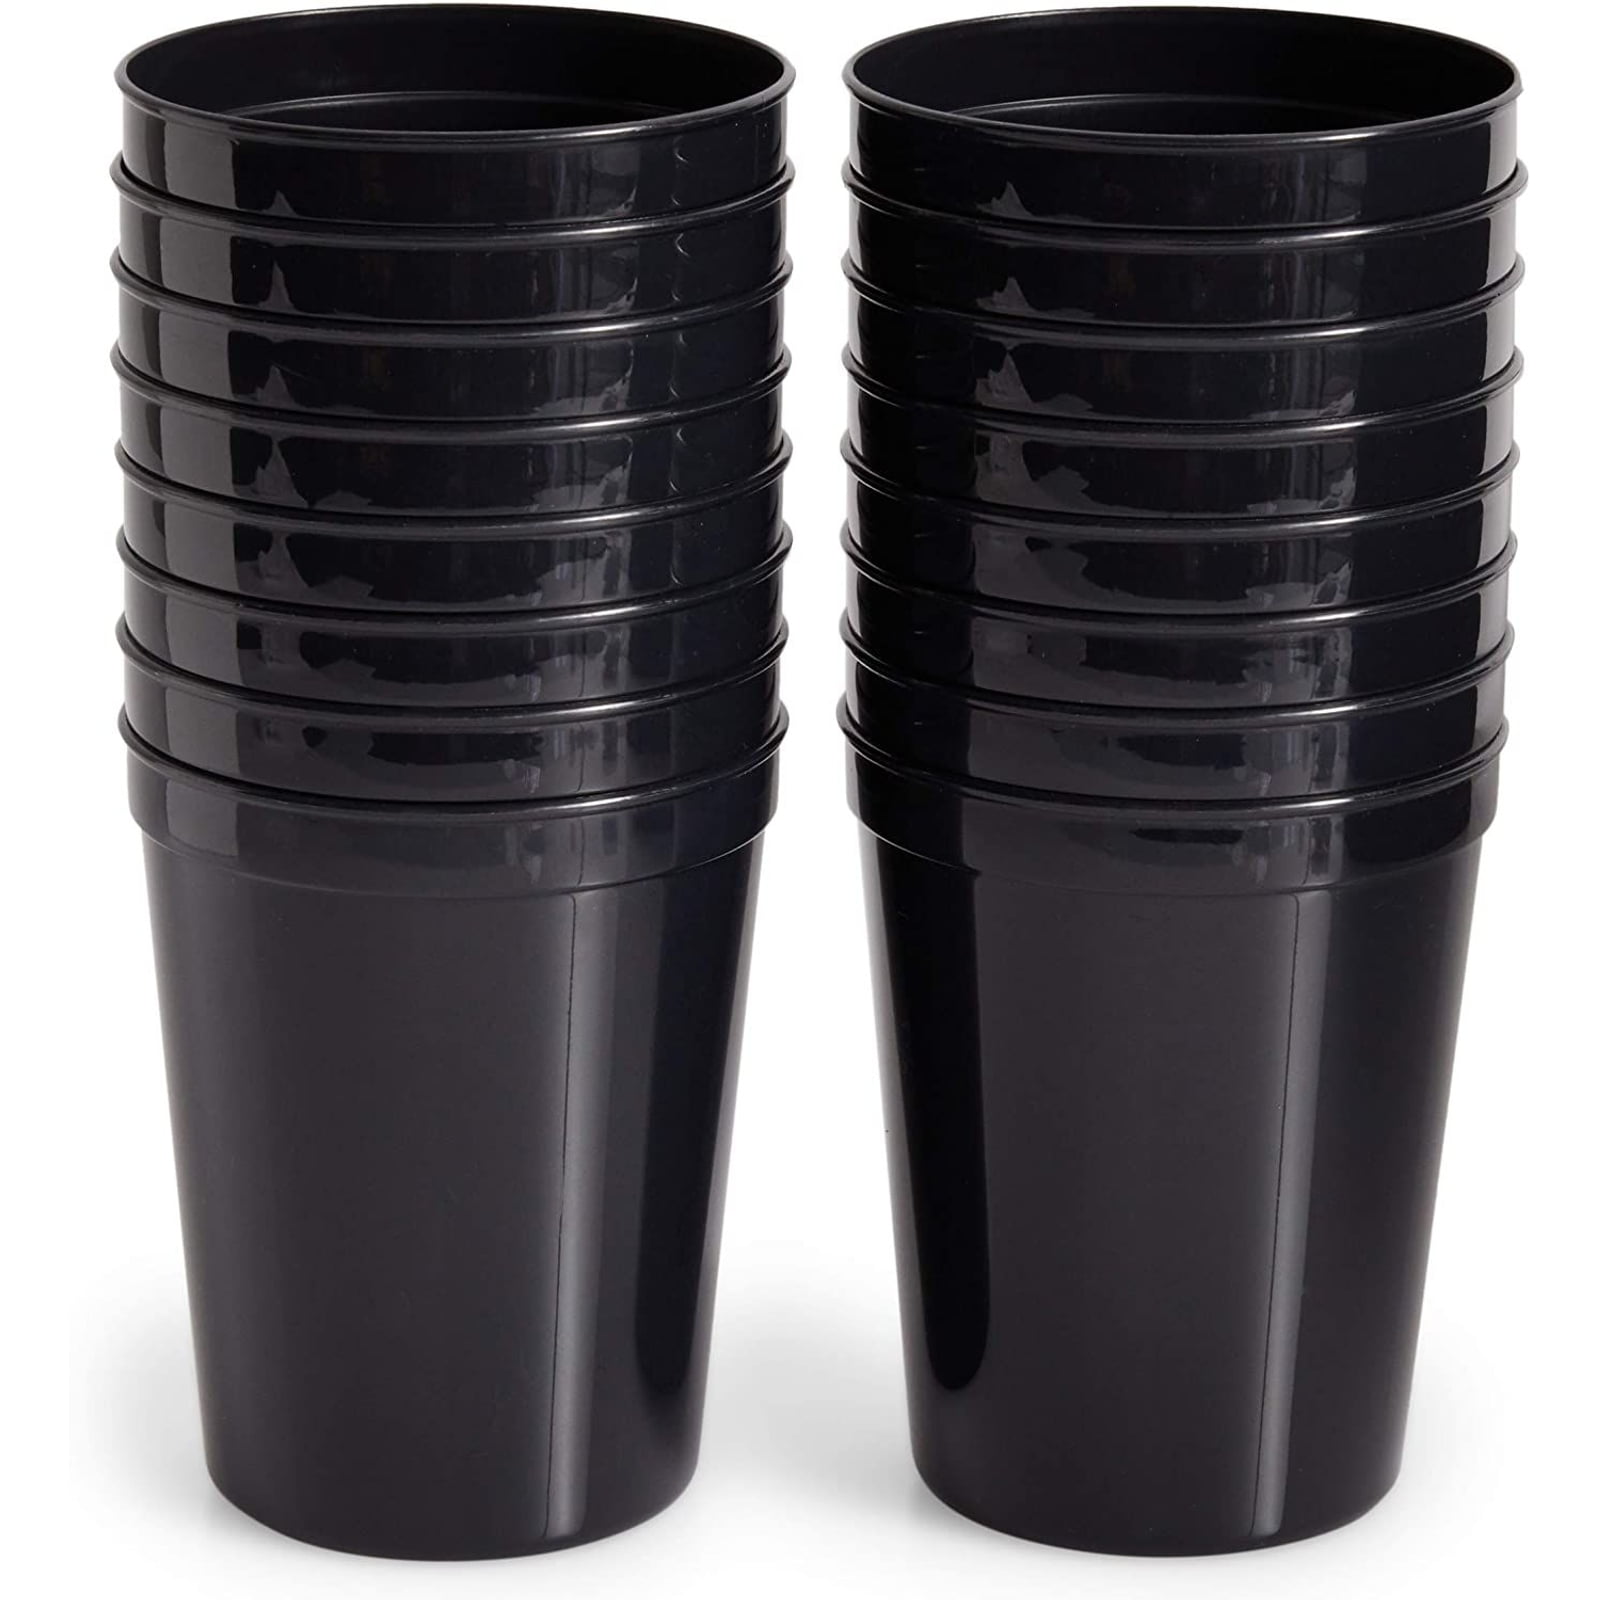 True Black Plastic Party Cup